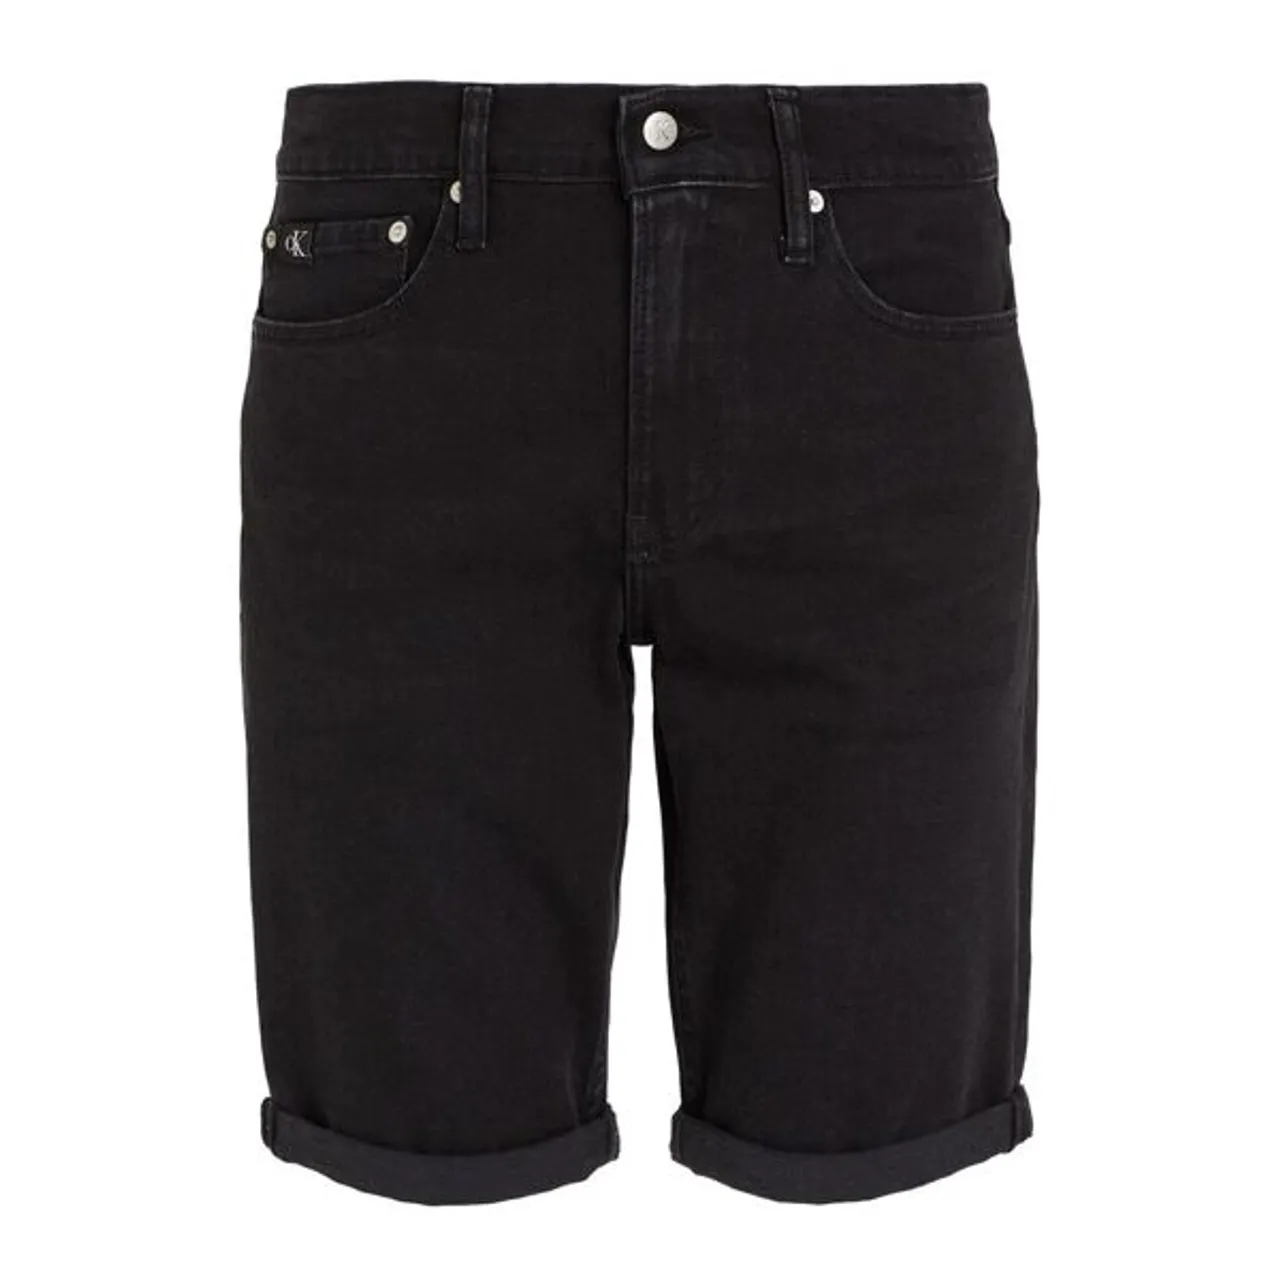 Jeansshorts CALVIN KLEIN JEANS "SLIM SHORT" Gr. 32, N-Gr, schwarz (denim black) Herren Jeans Shorts in klassischer 5-Pocket-Form